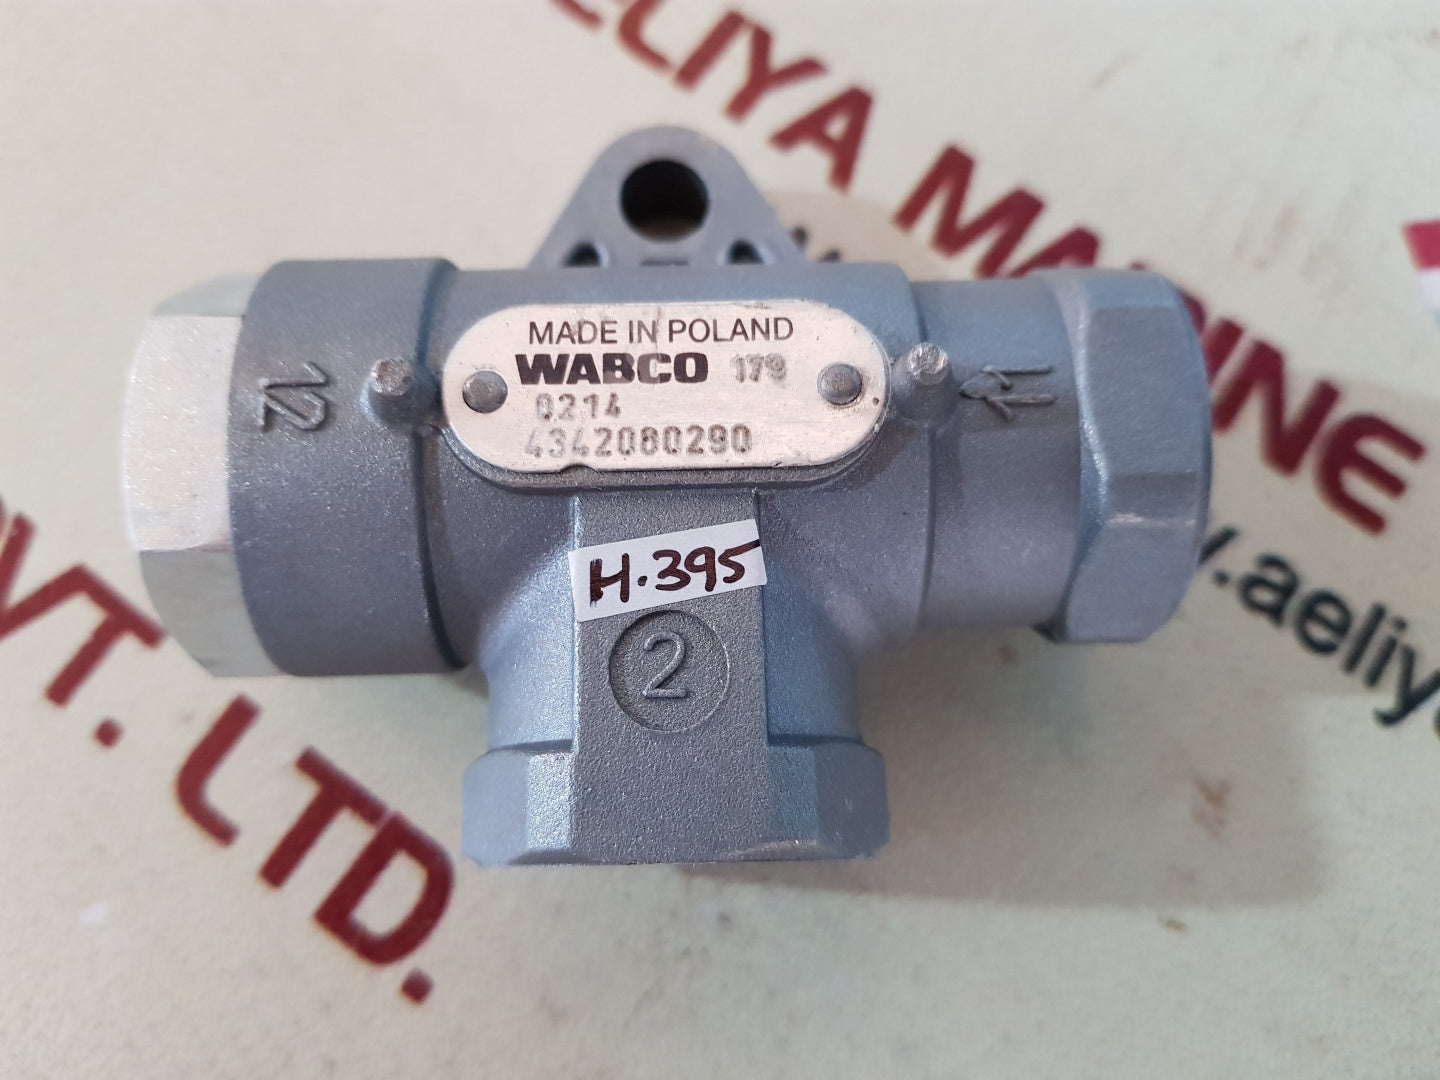 Wabco 4342080290 two way valve 